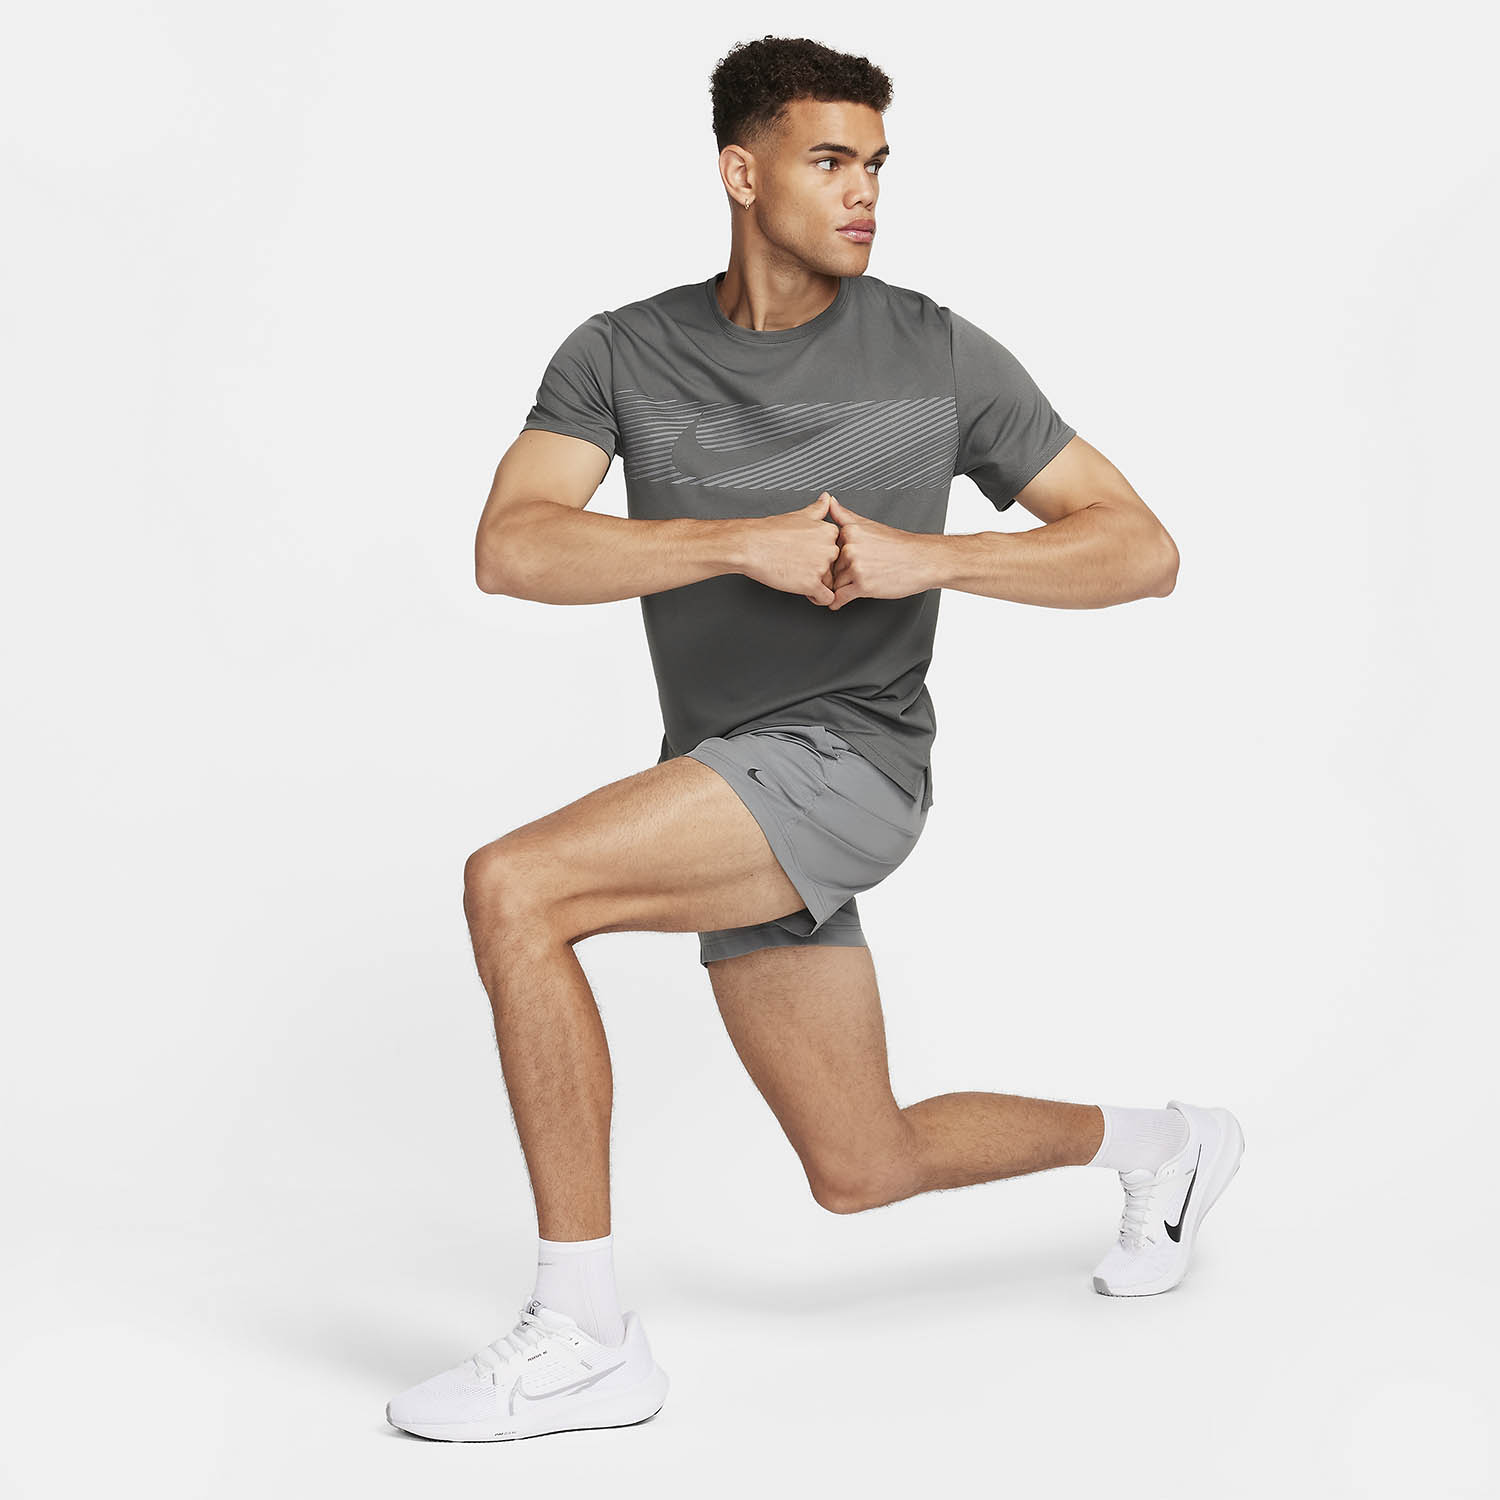 Nike Miler Flash Camiseta - Iron Grey/Reflective Silver